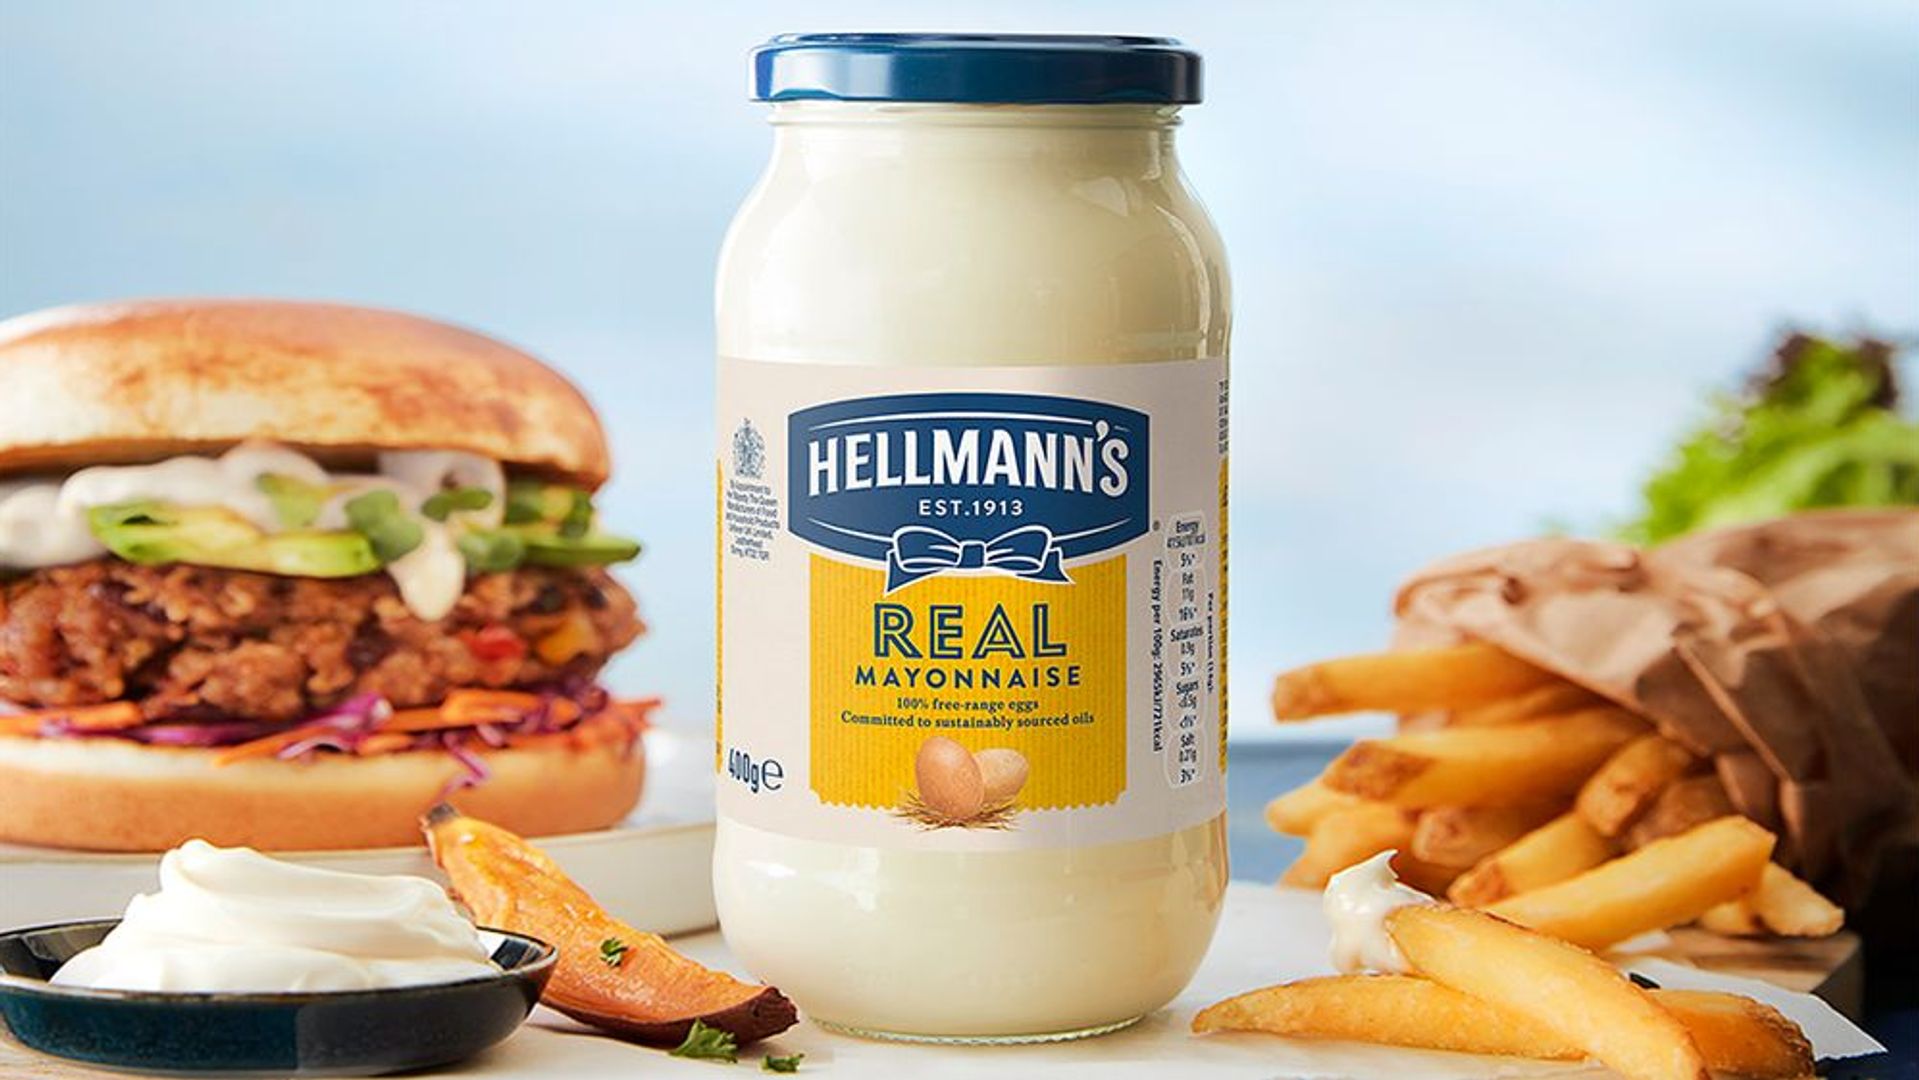 Hellmann’s mayonnaise + burger and chips